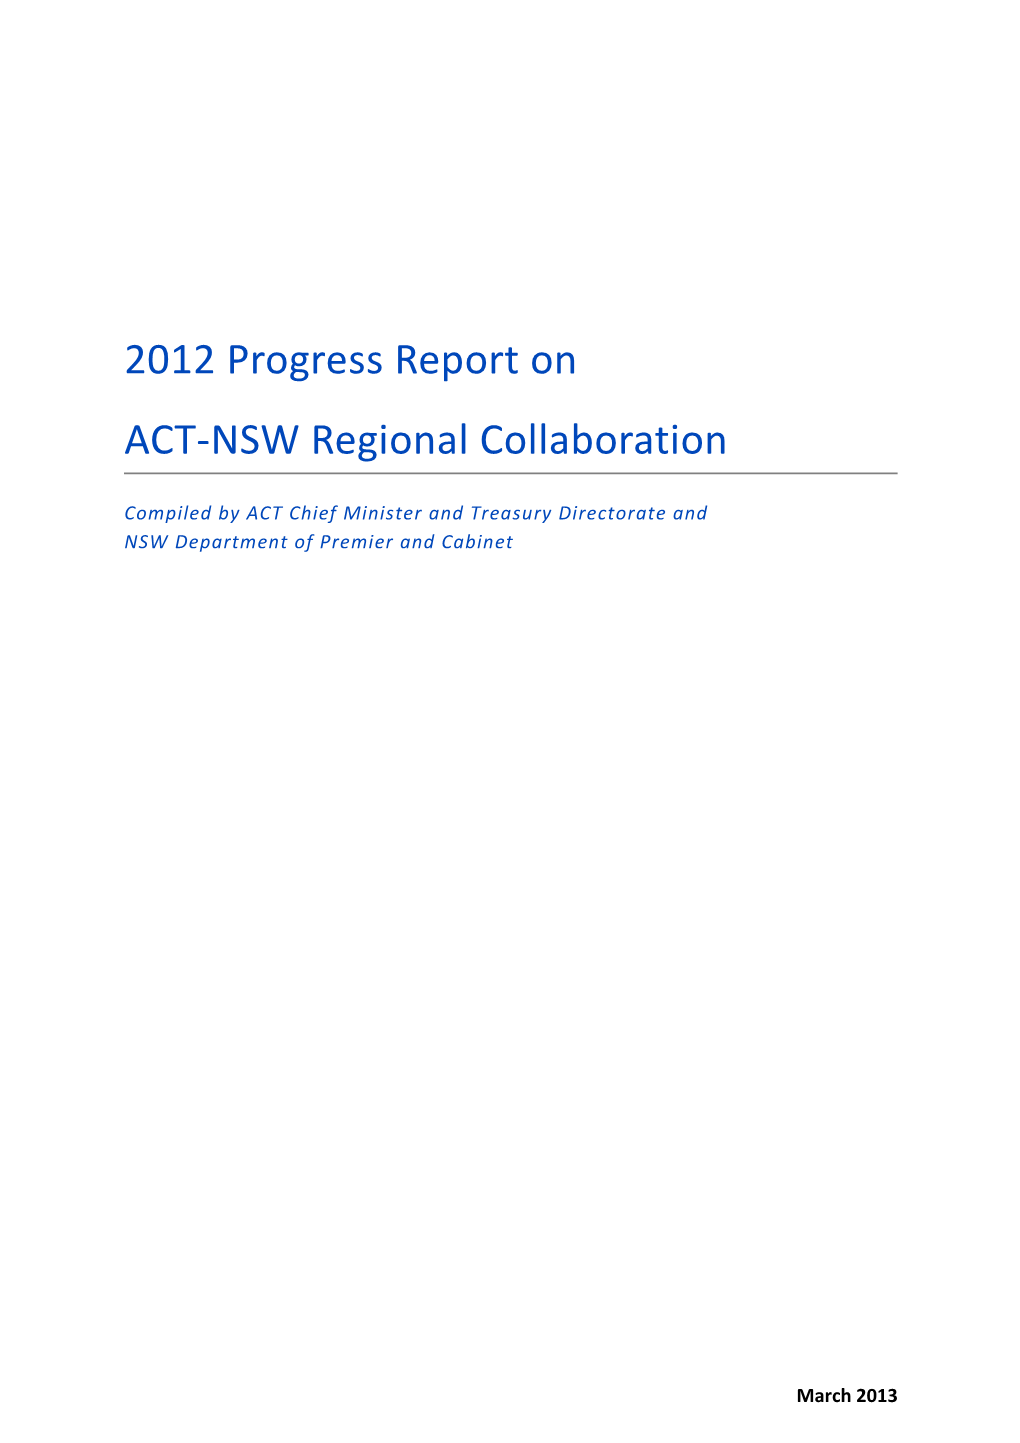 2012 Progress Report on ACT-NSW Regional Collaboration